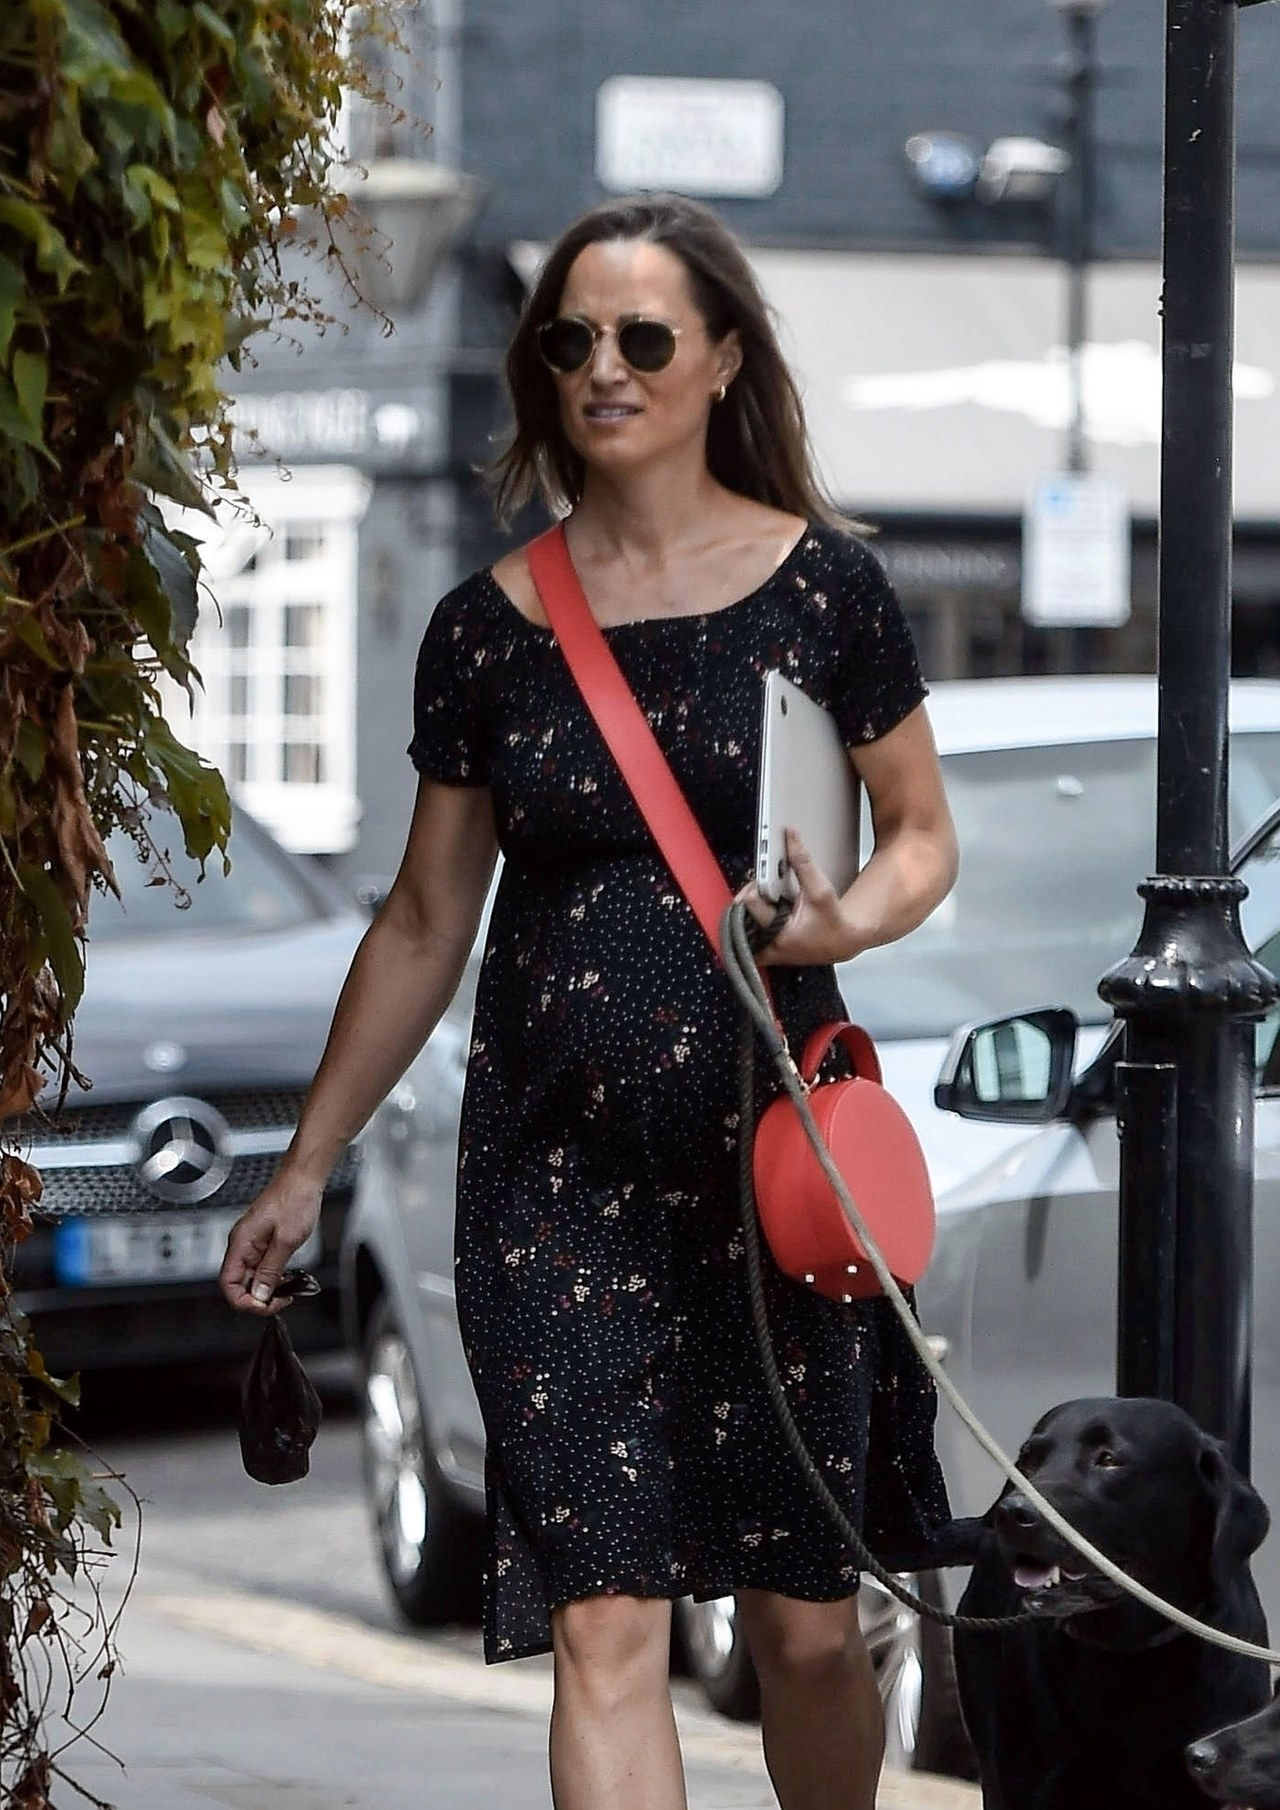 *VÝHRADNÍ* Pregnant Pippa Middleton seen walking her dogs in Chelsea